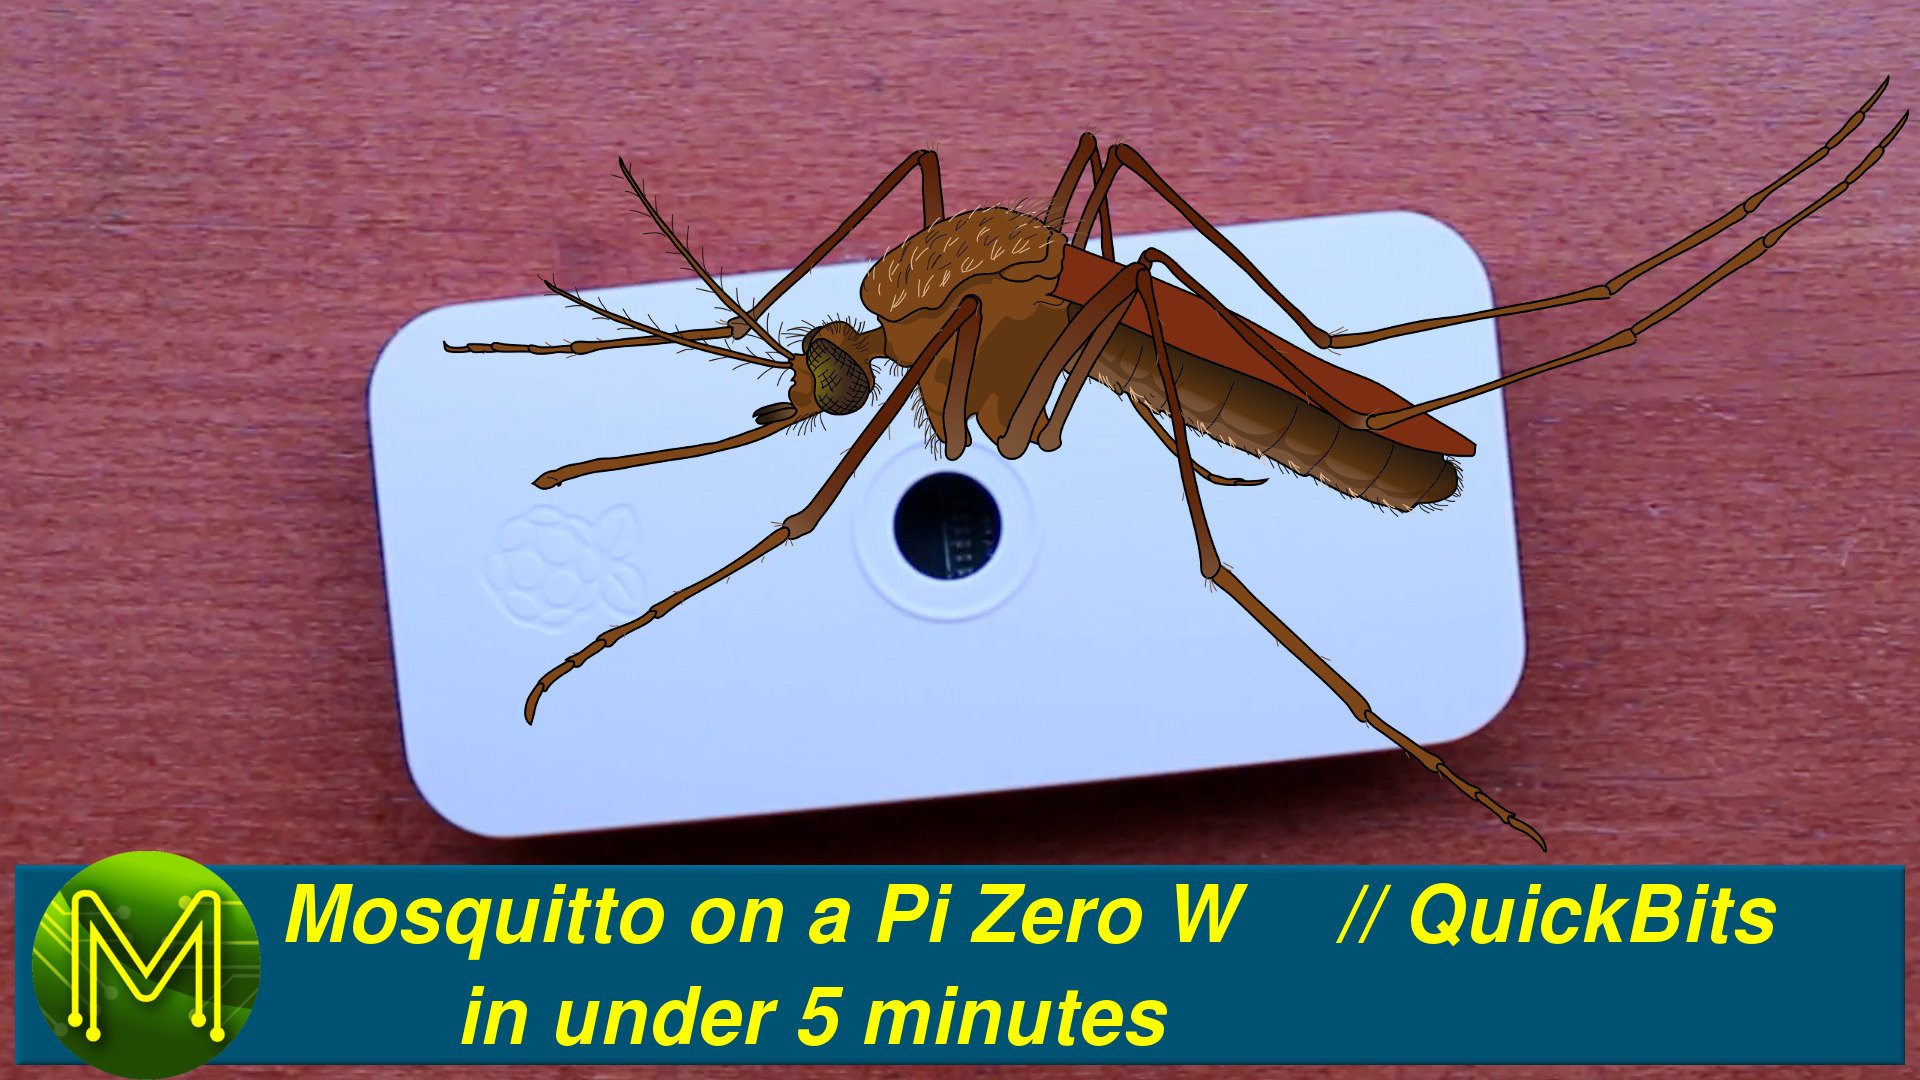 MQTT Mosquitto on a Pi Zero W in under 5 minutes // Tutorial